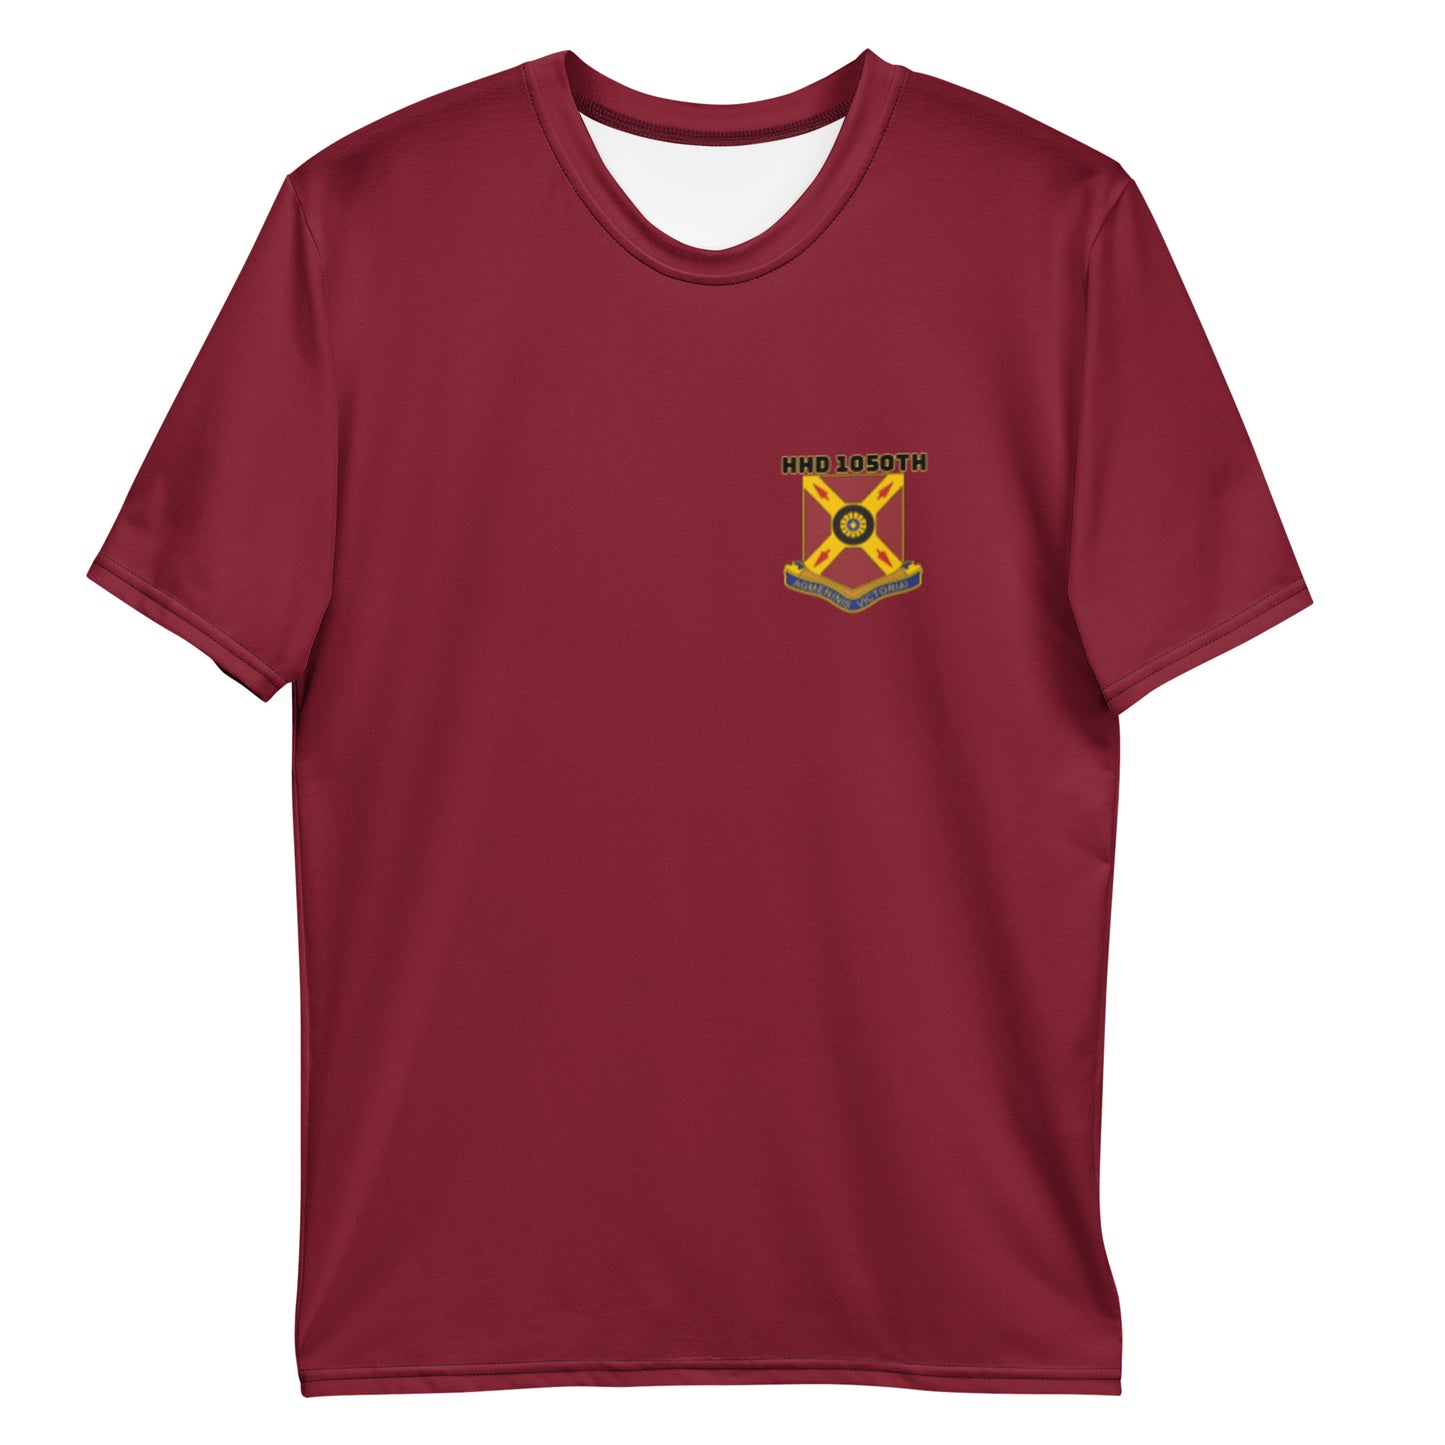 WOLFHOUND 1050TH Men's t-shirt - BURGUNDY